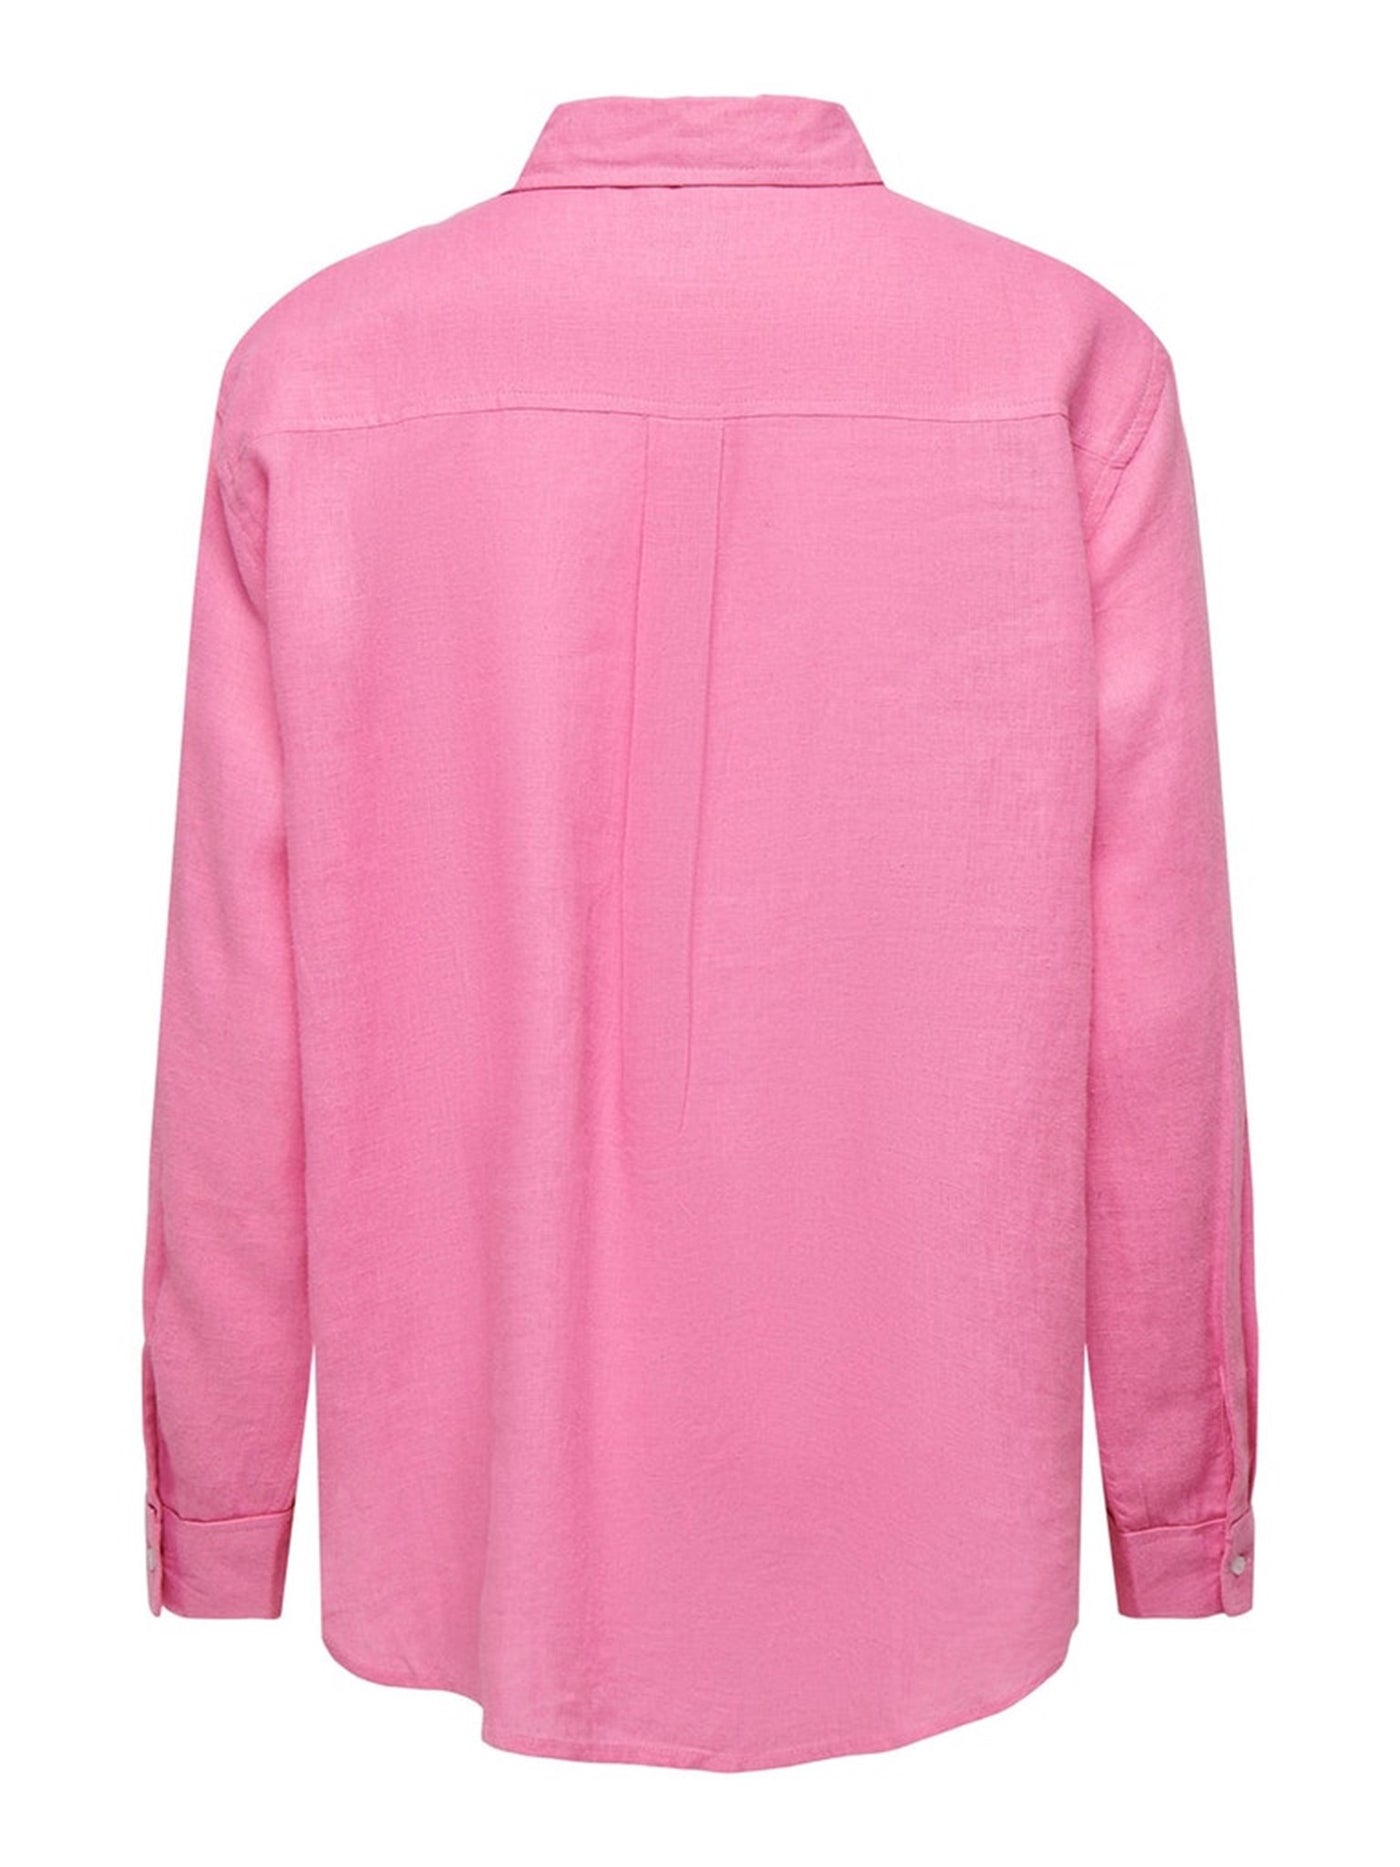 Tokyo Linen Skjorta - Sachet Pink - ONLY - Rosa 5